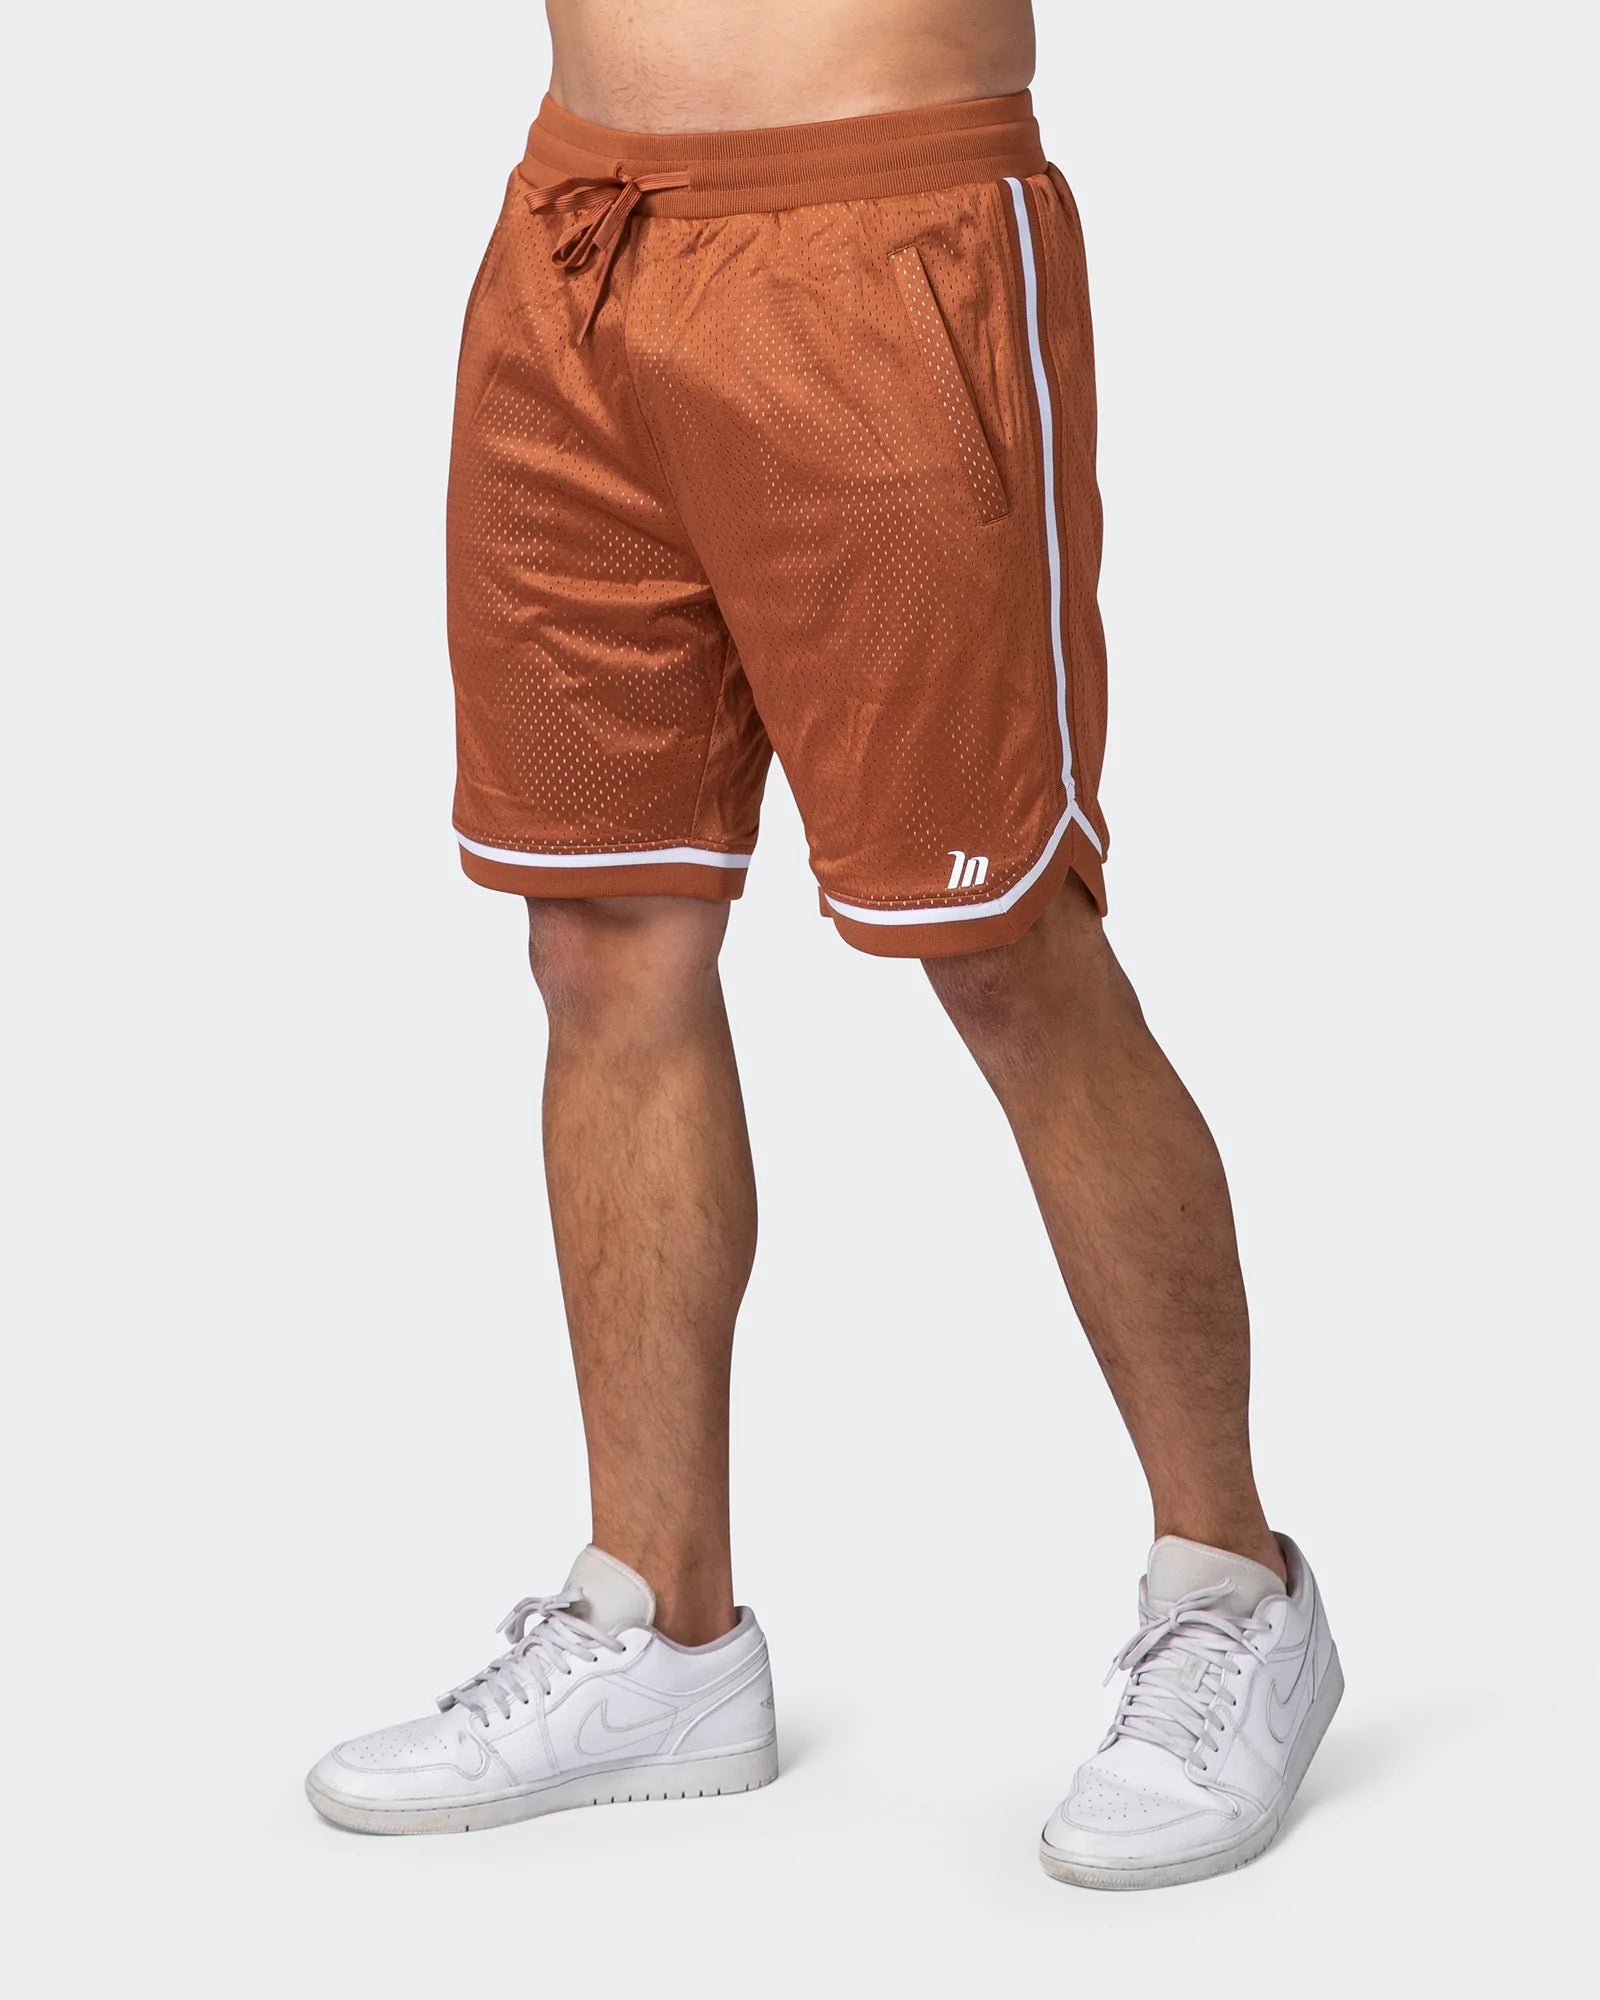 musclenation Shorts 8" Basketball Shorts - Sandstone